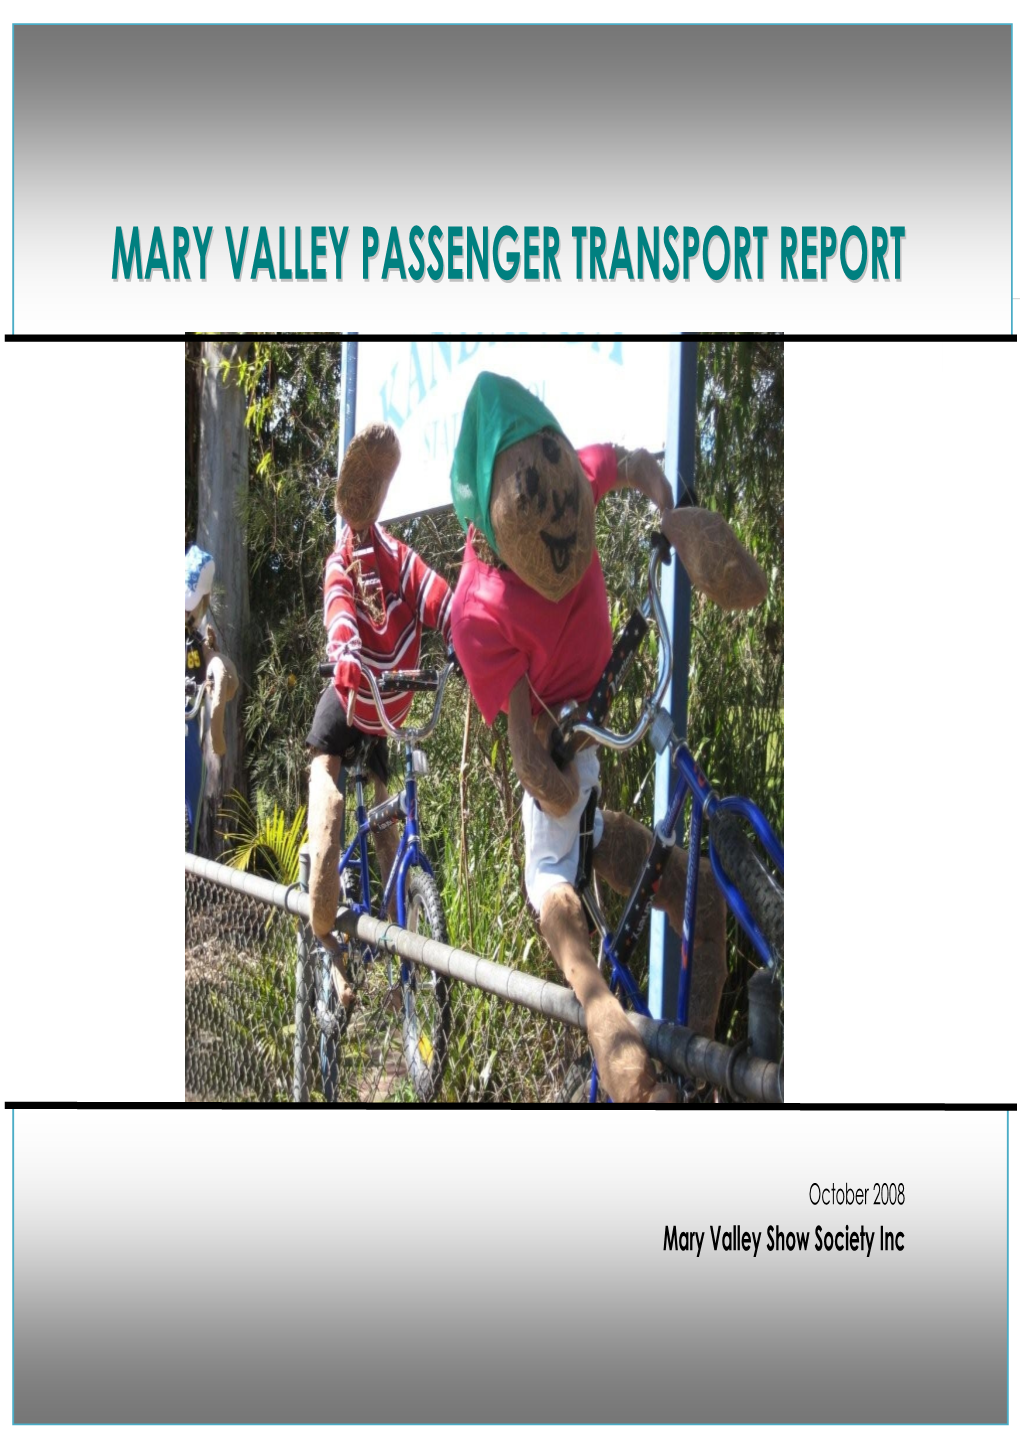 Mary Valley Passenger Transport Report